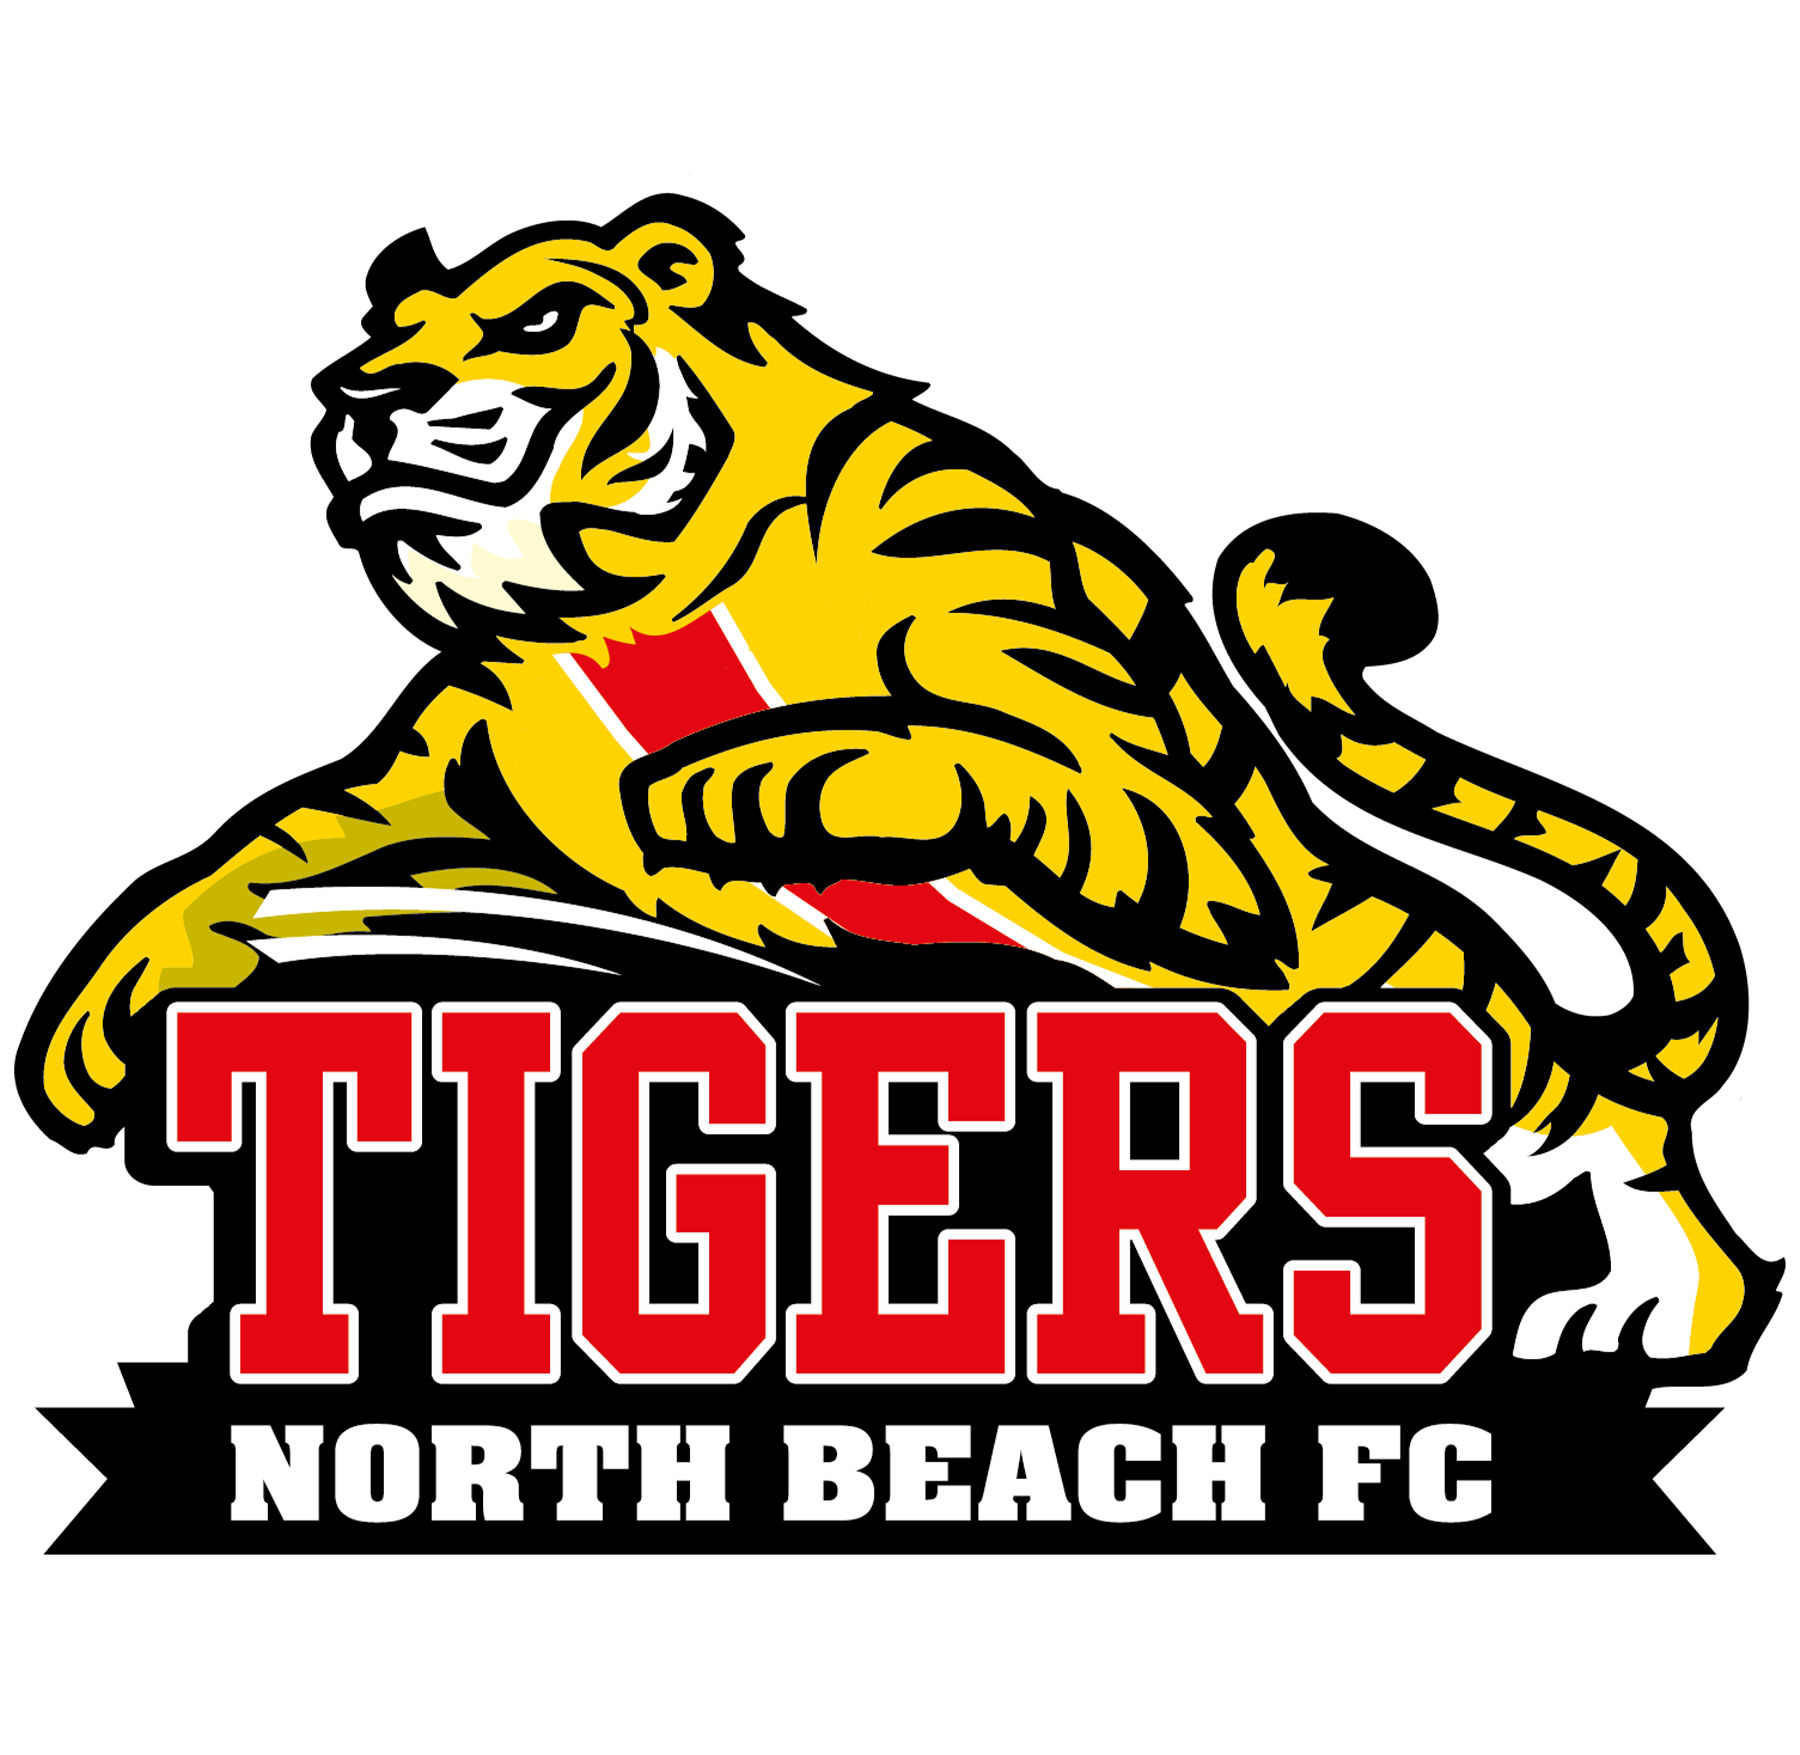 North Beach Football Club